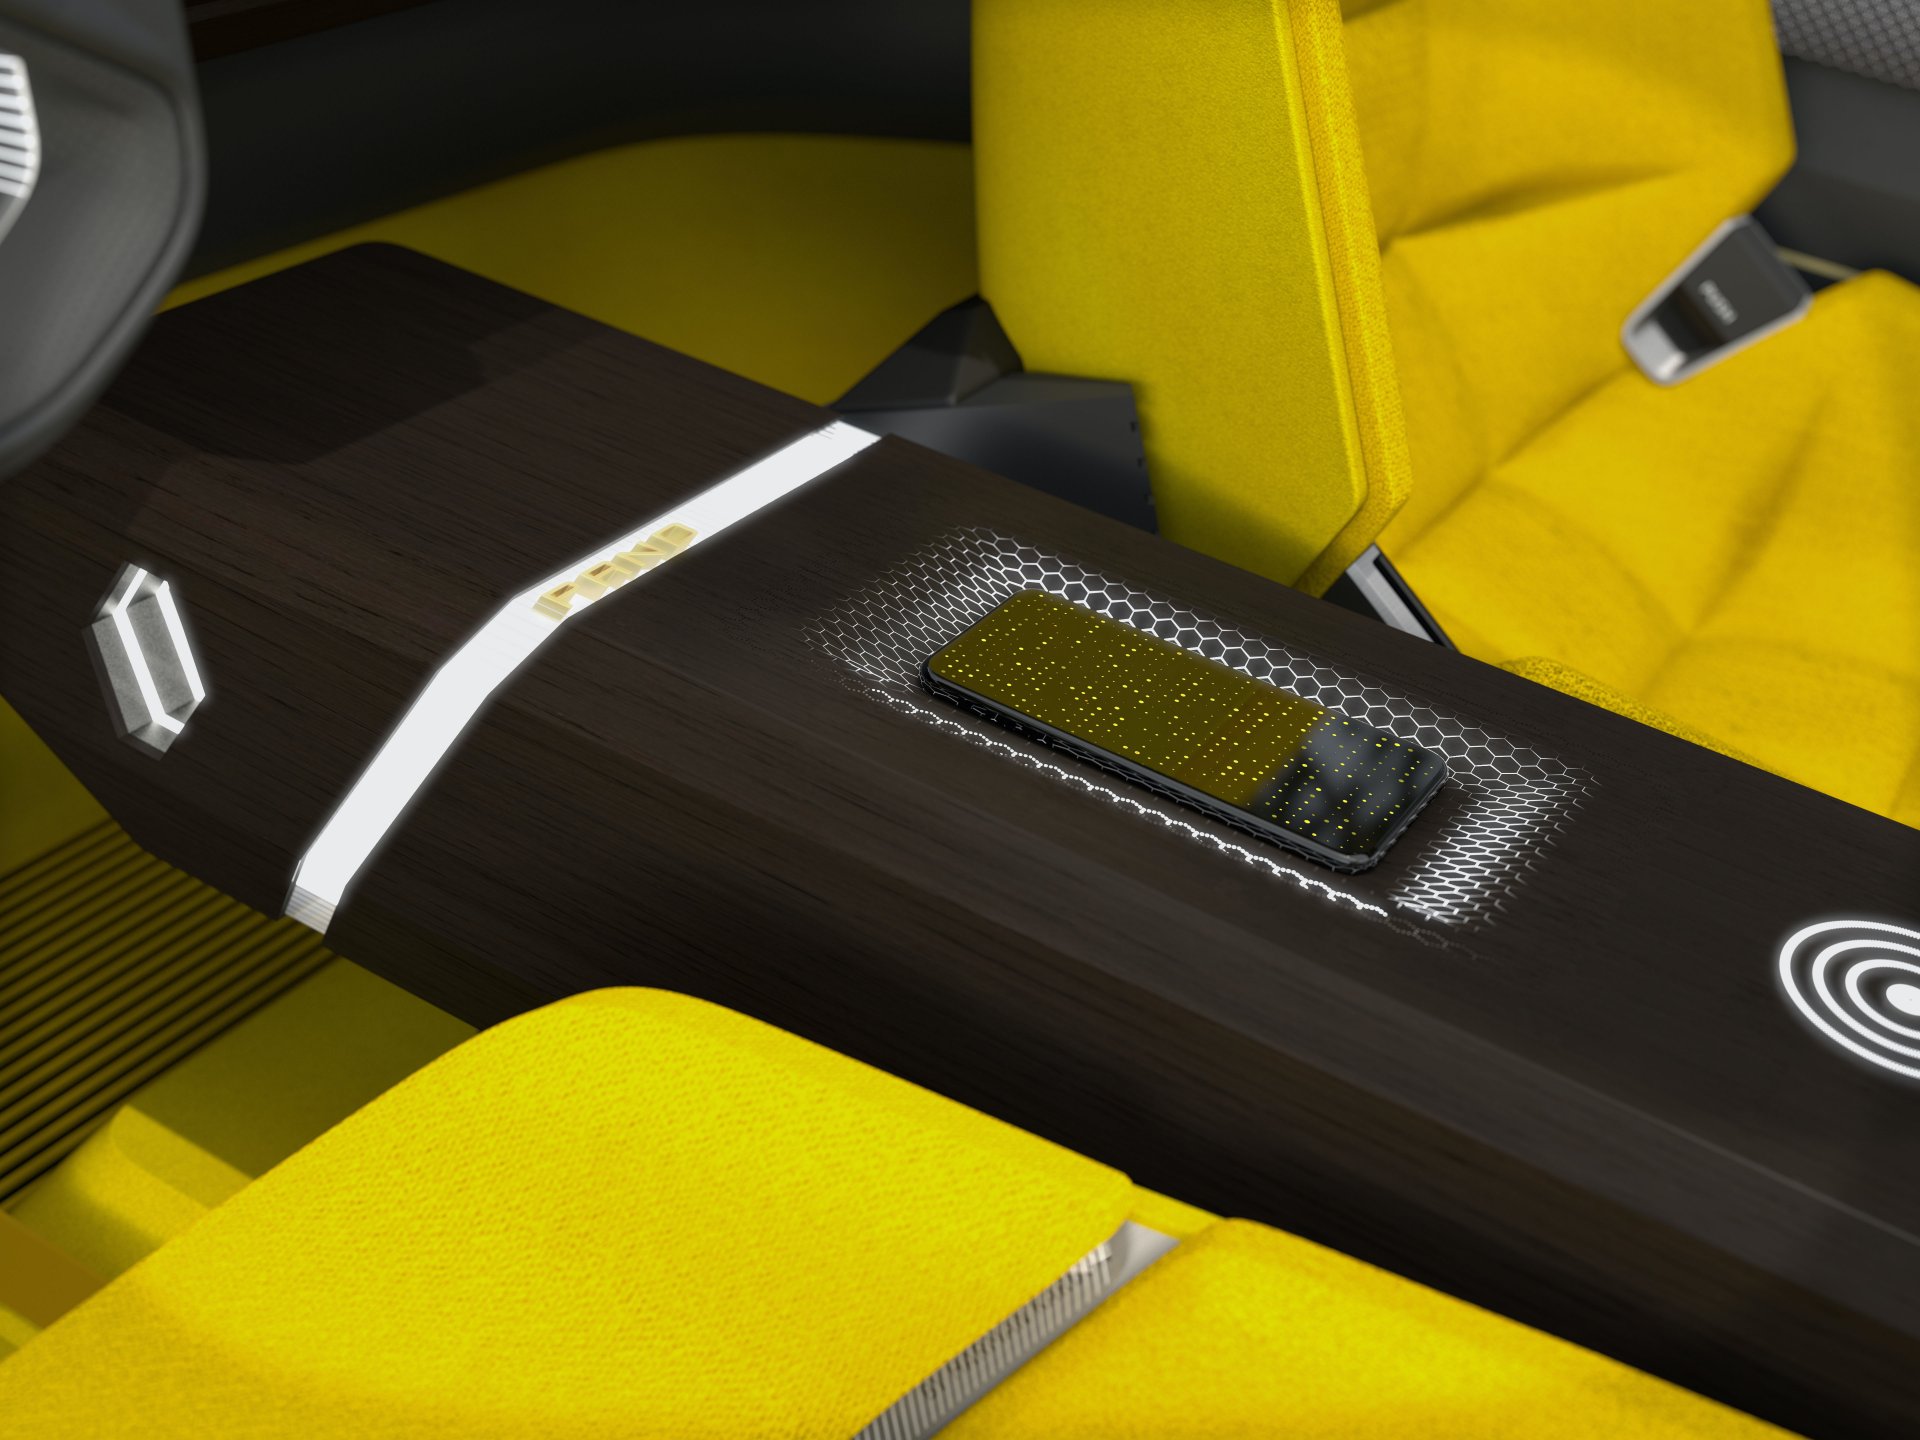 Renault'dan 700 km menzile sahip elektrikli SUV konsepti: Morphoz